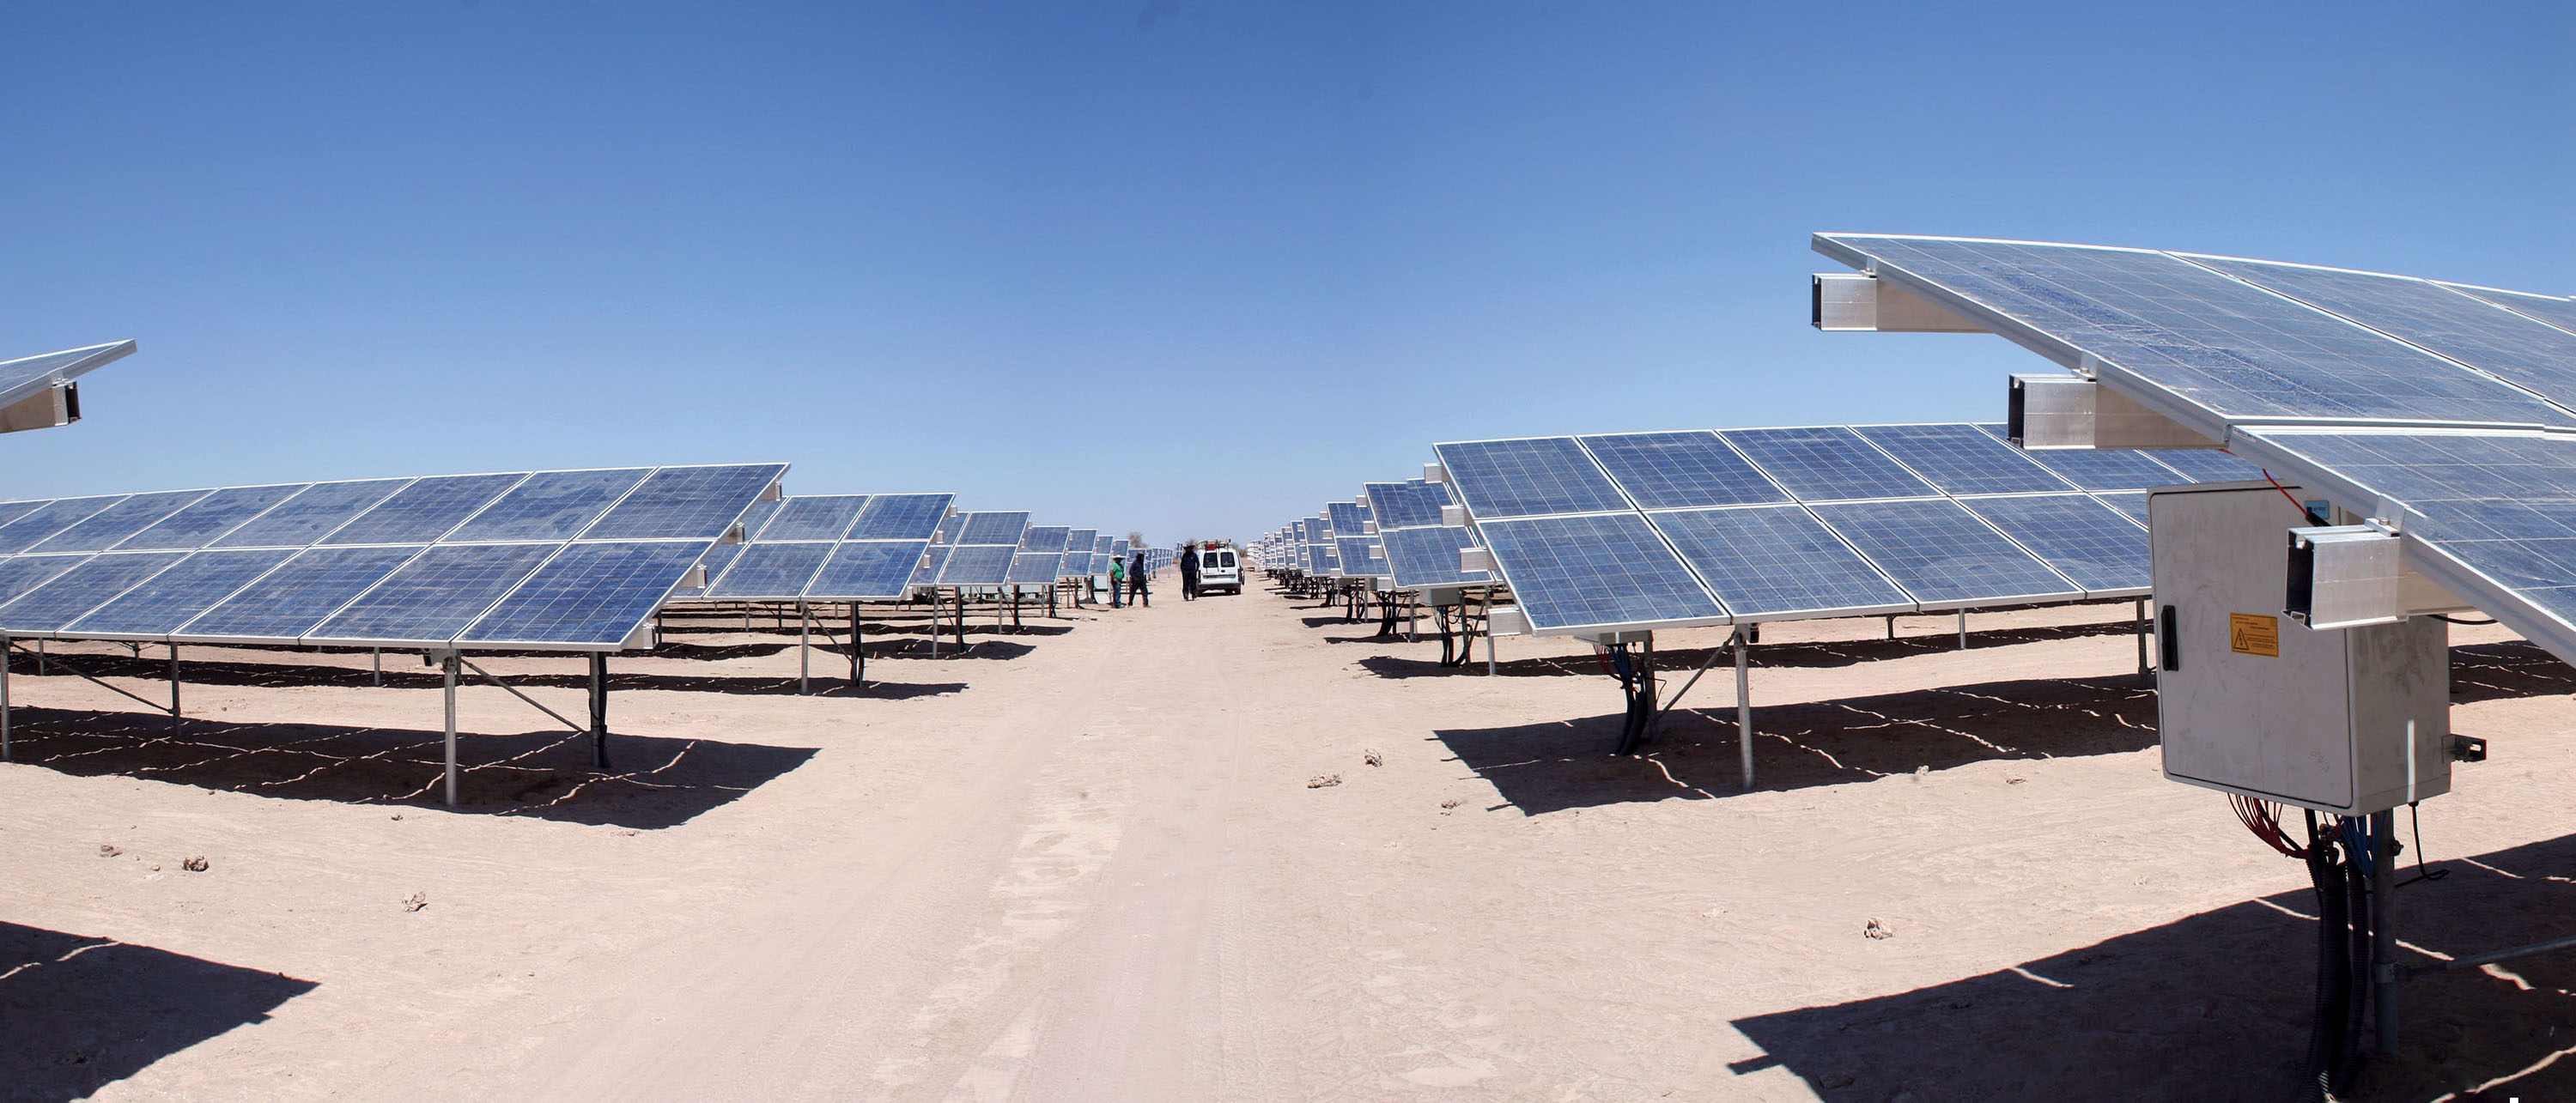 Looking down a dirt road through a massive photovoltaic array in the Atacama Desert, Chile. (Photo by Rodrigo Arancibia Zamora.)